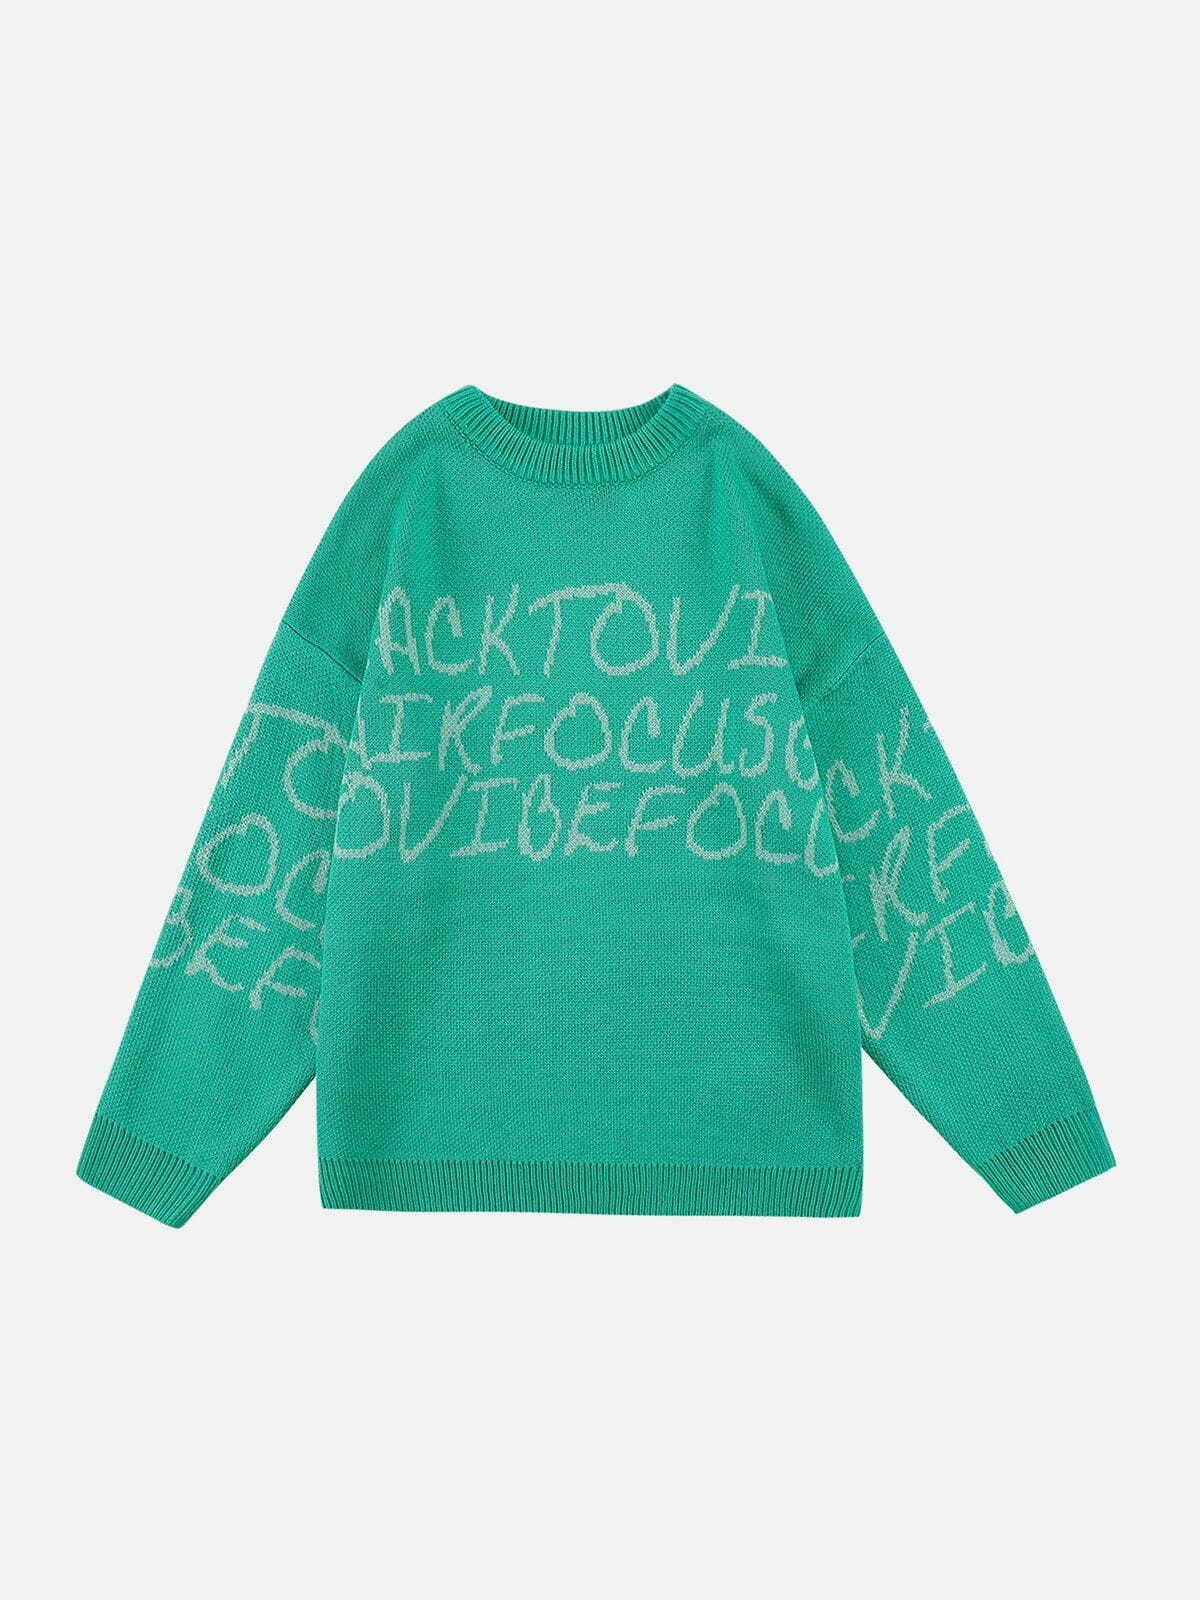 monogram print sweater iconic & vibrant streetwear 4774